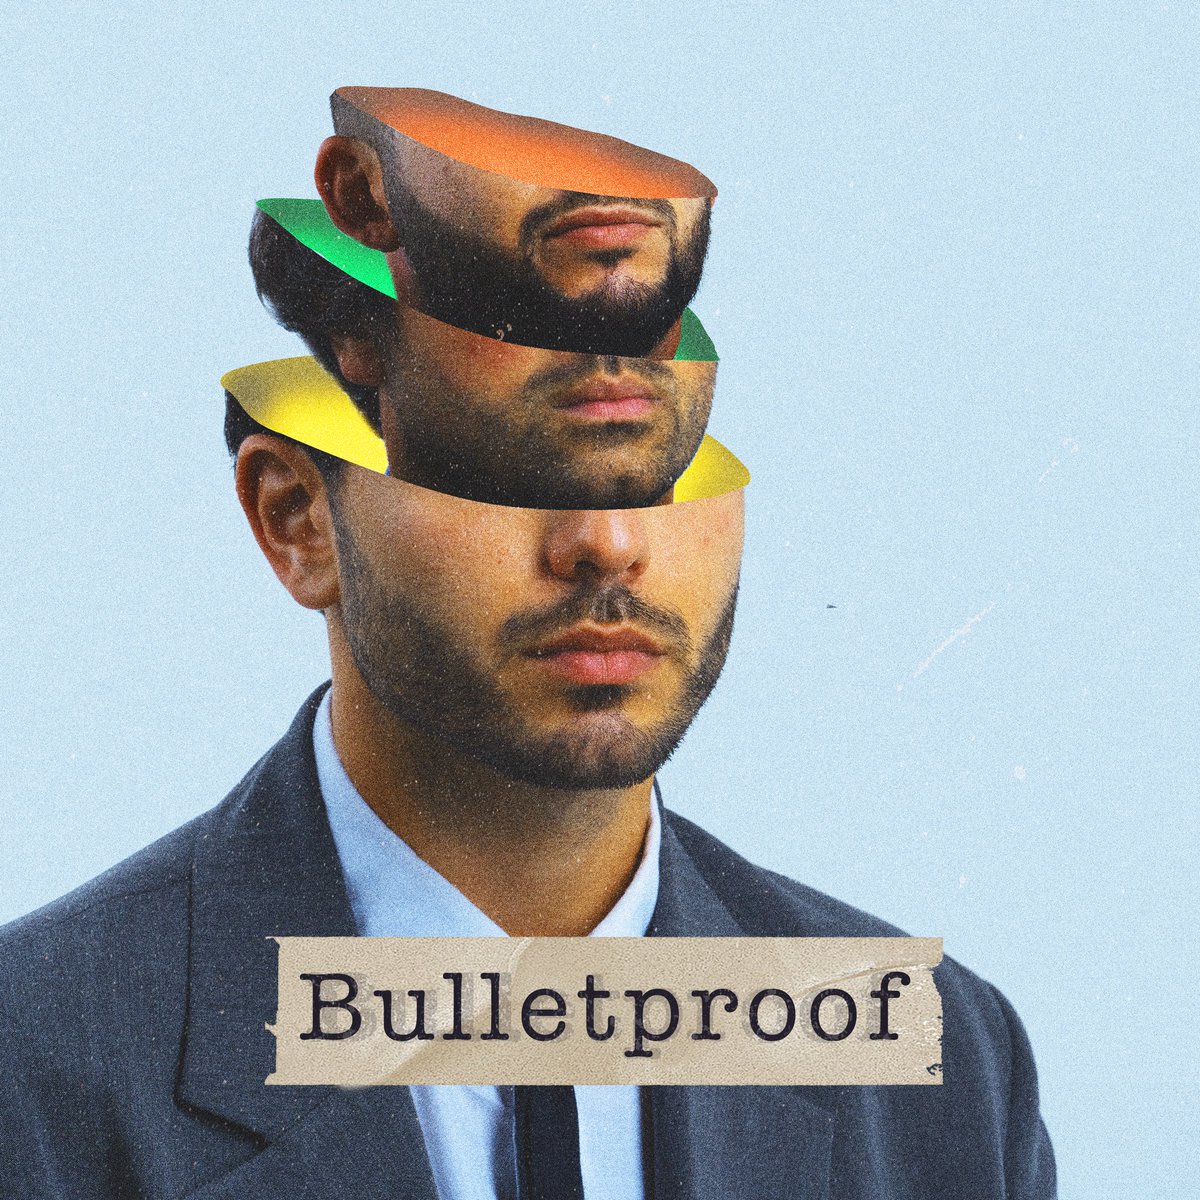 Bulletproof
03/11
Pre-save:  distrokid.com/hyperfollow/th… 

#thebusker #newrelease #bulletproof #single #band #music